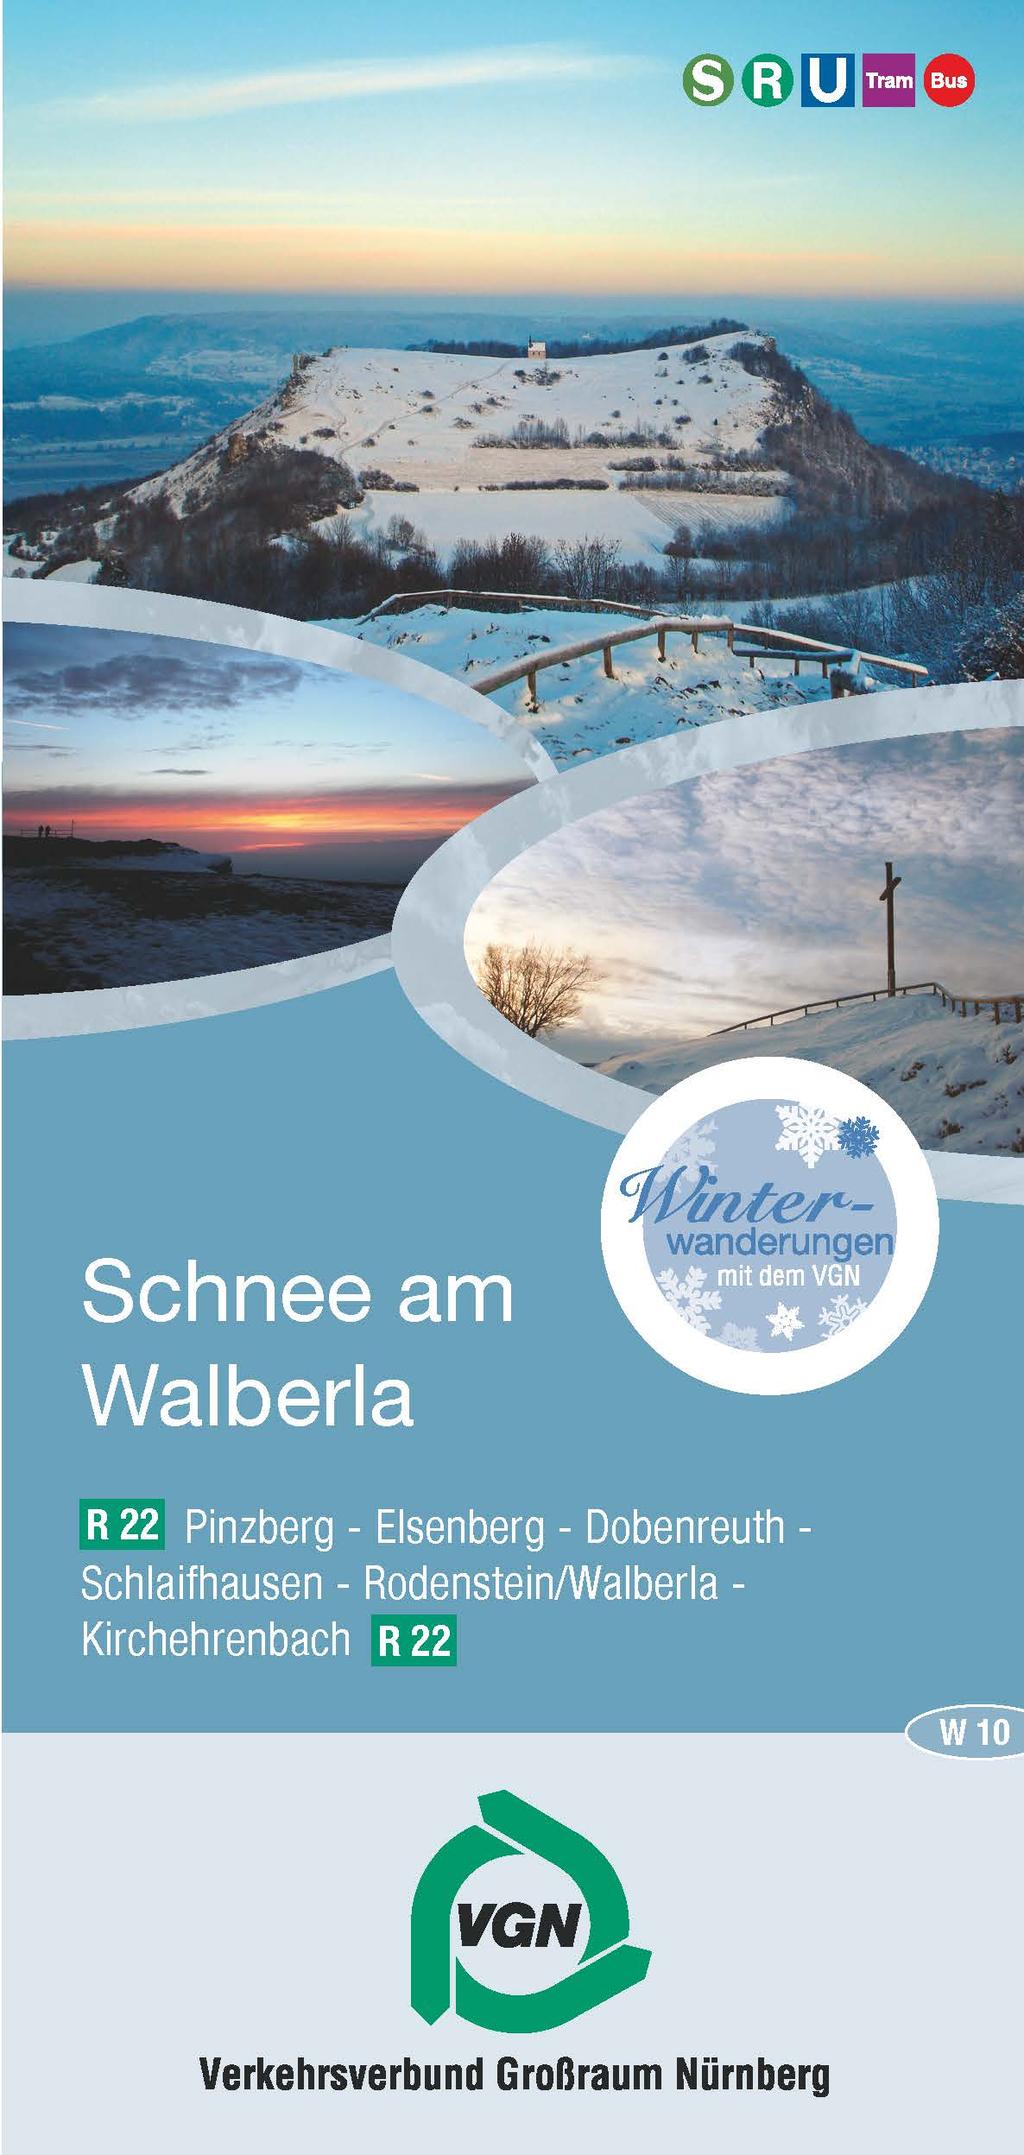 Schnee am Walberla Entfernung: ca. 15 km, Dauer: ca. 3 Std.